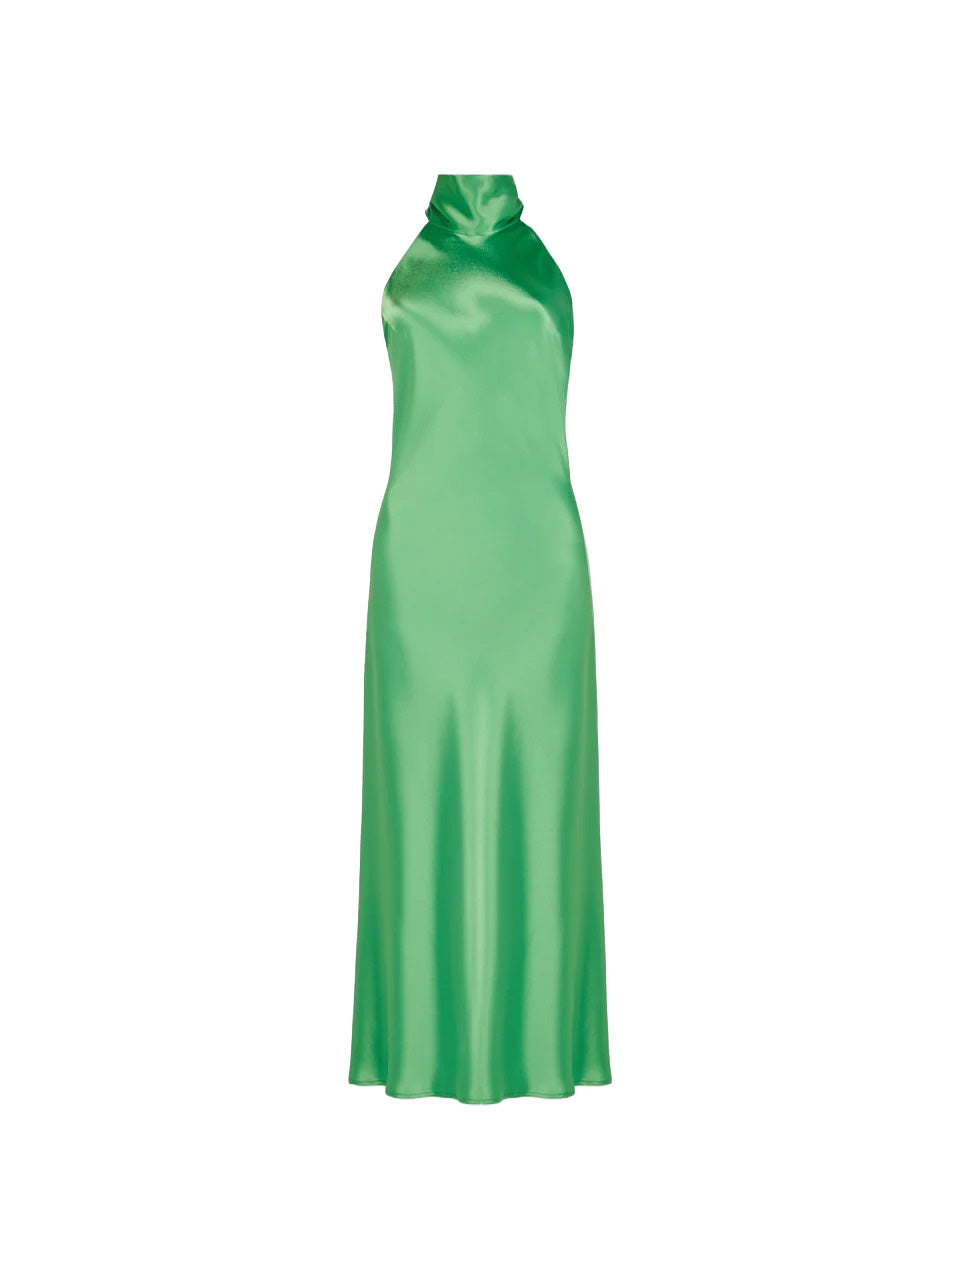 Cropped Sienna Dress in Paris Green